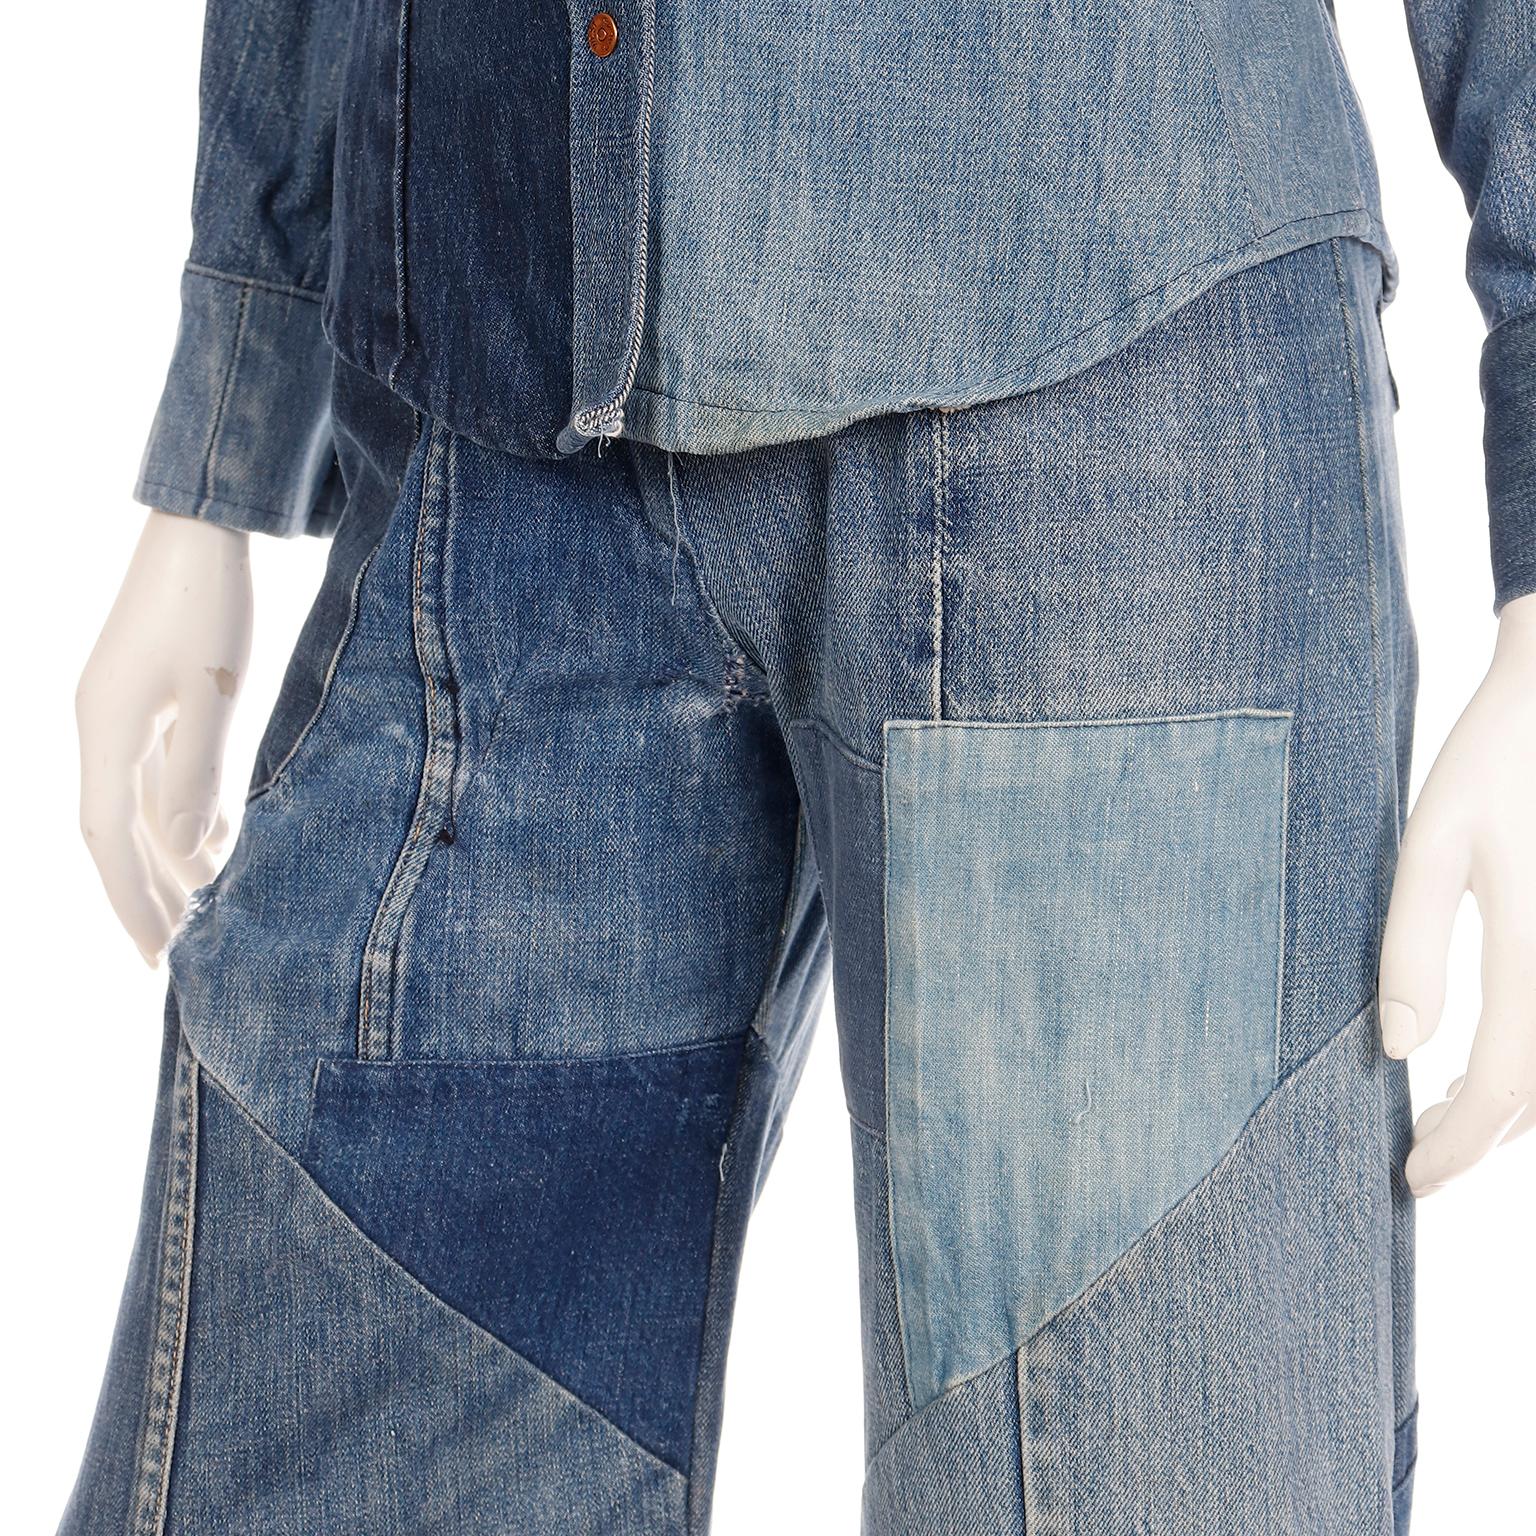 Simis Vintage 1970s Patchwork Denim Jeans and Button Front Shirt 2 Pc Outfit 3